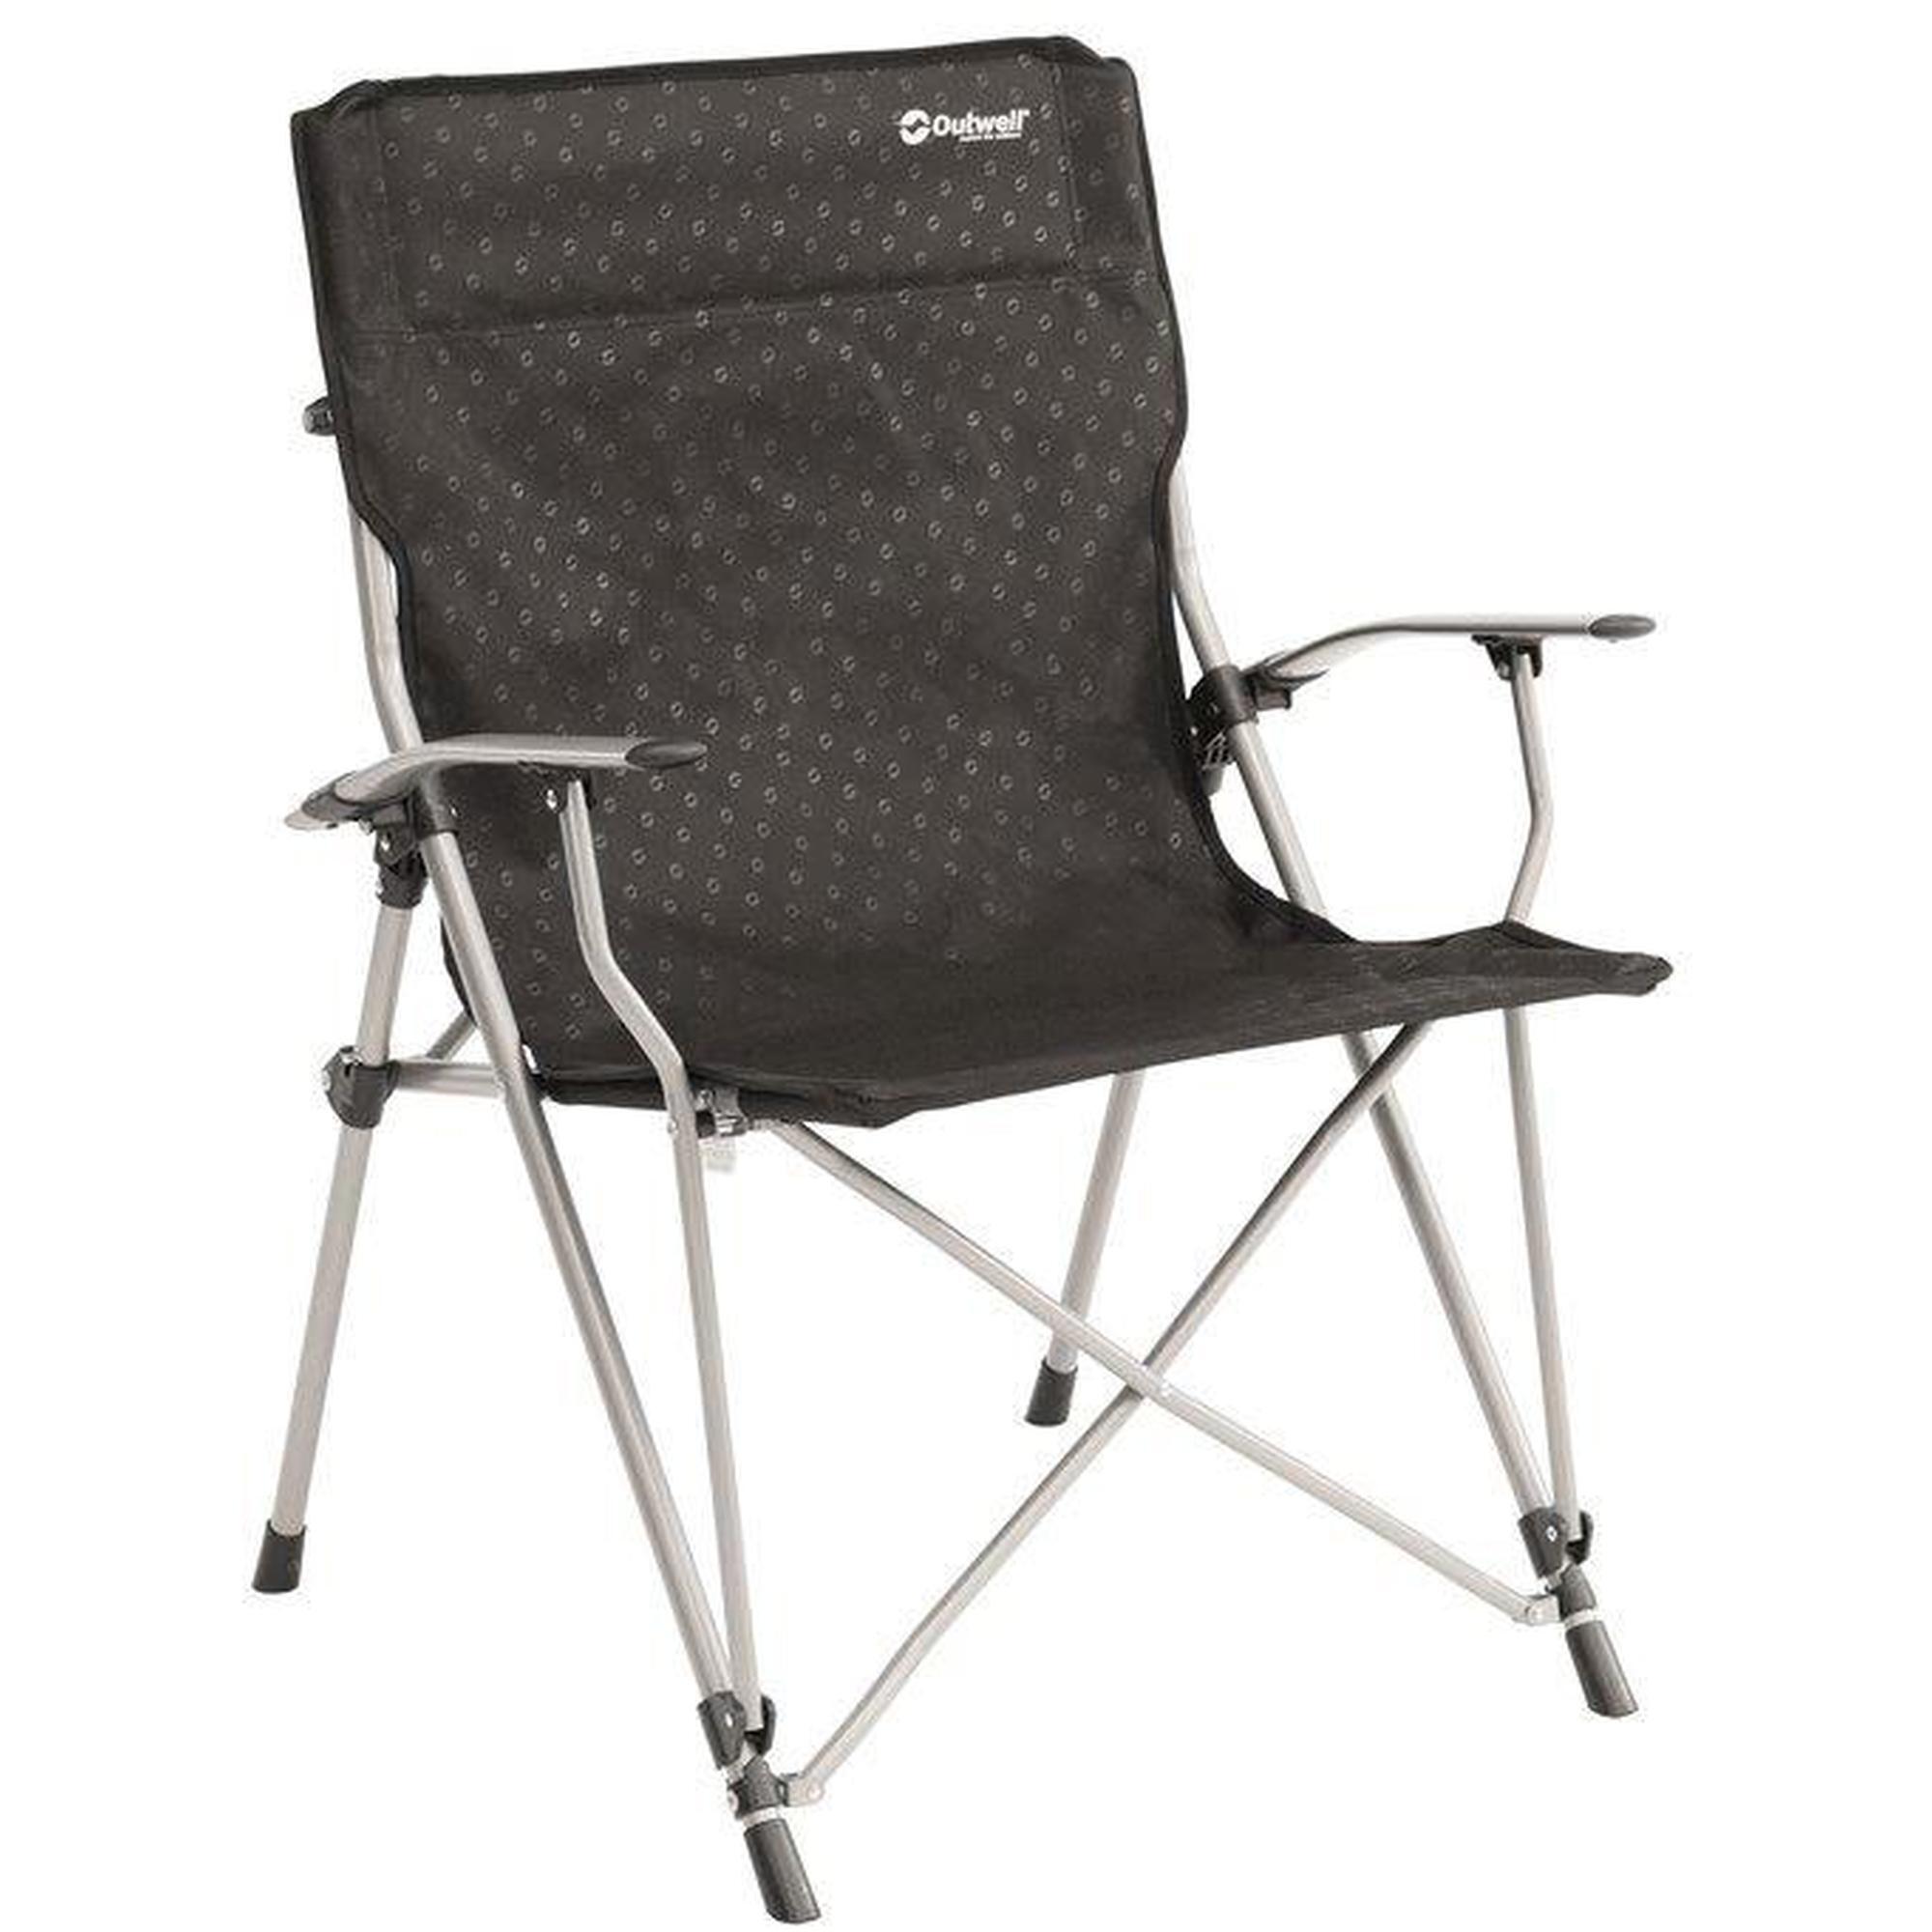 Outwell Folding Camping Chair Goya XL Black 1/4